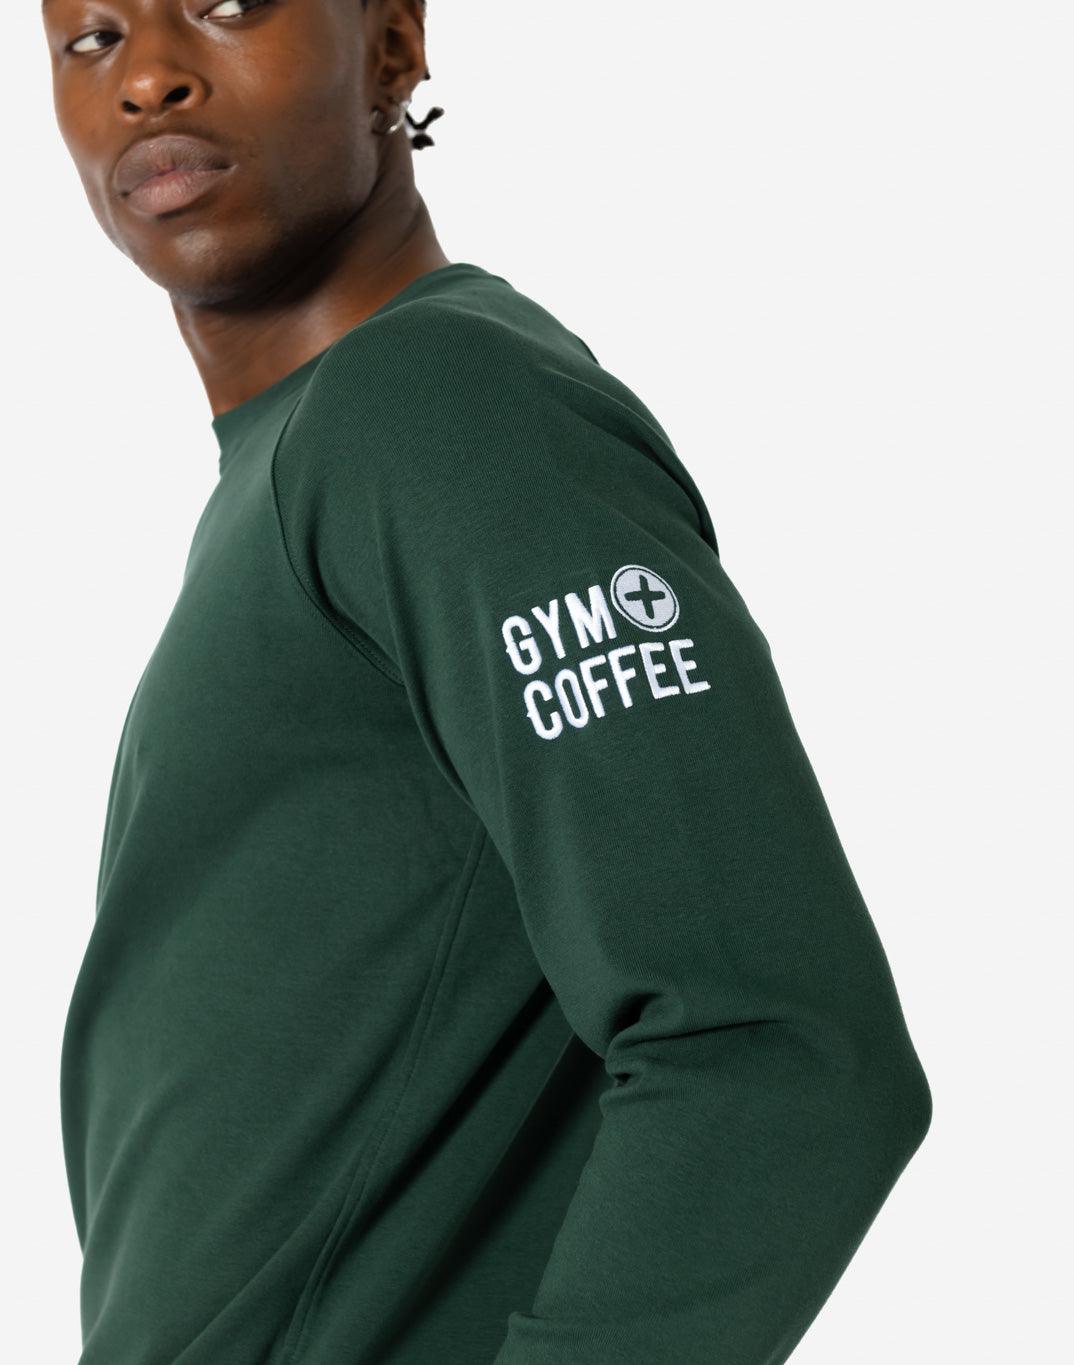 Chill Base Crew in Mountain Green - Sweatshirts - Gym+Coffee IE